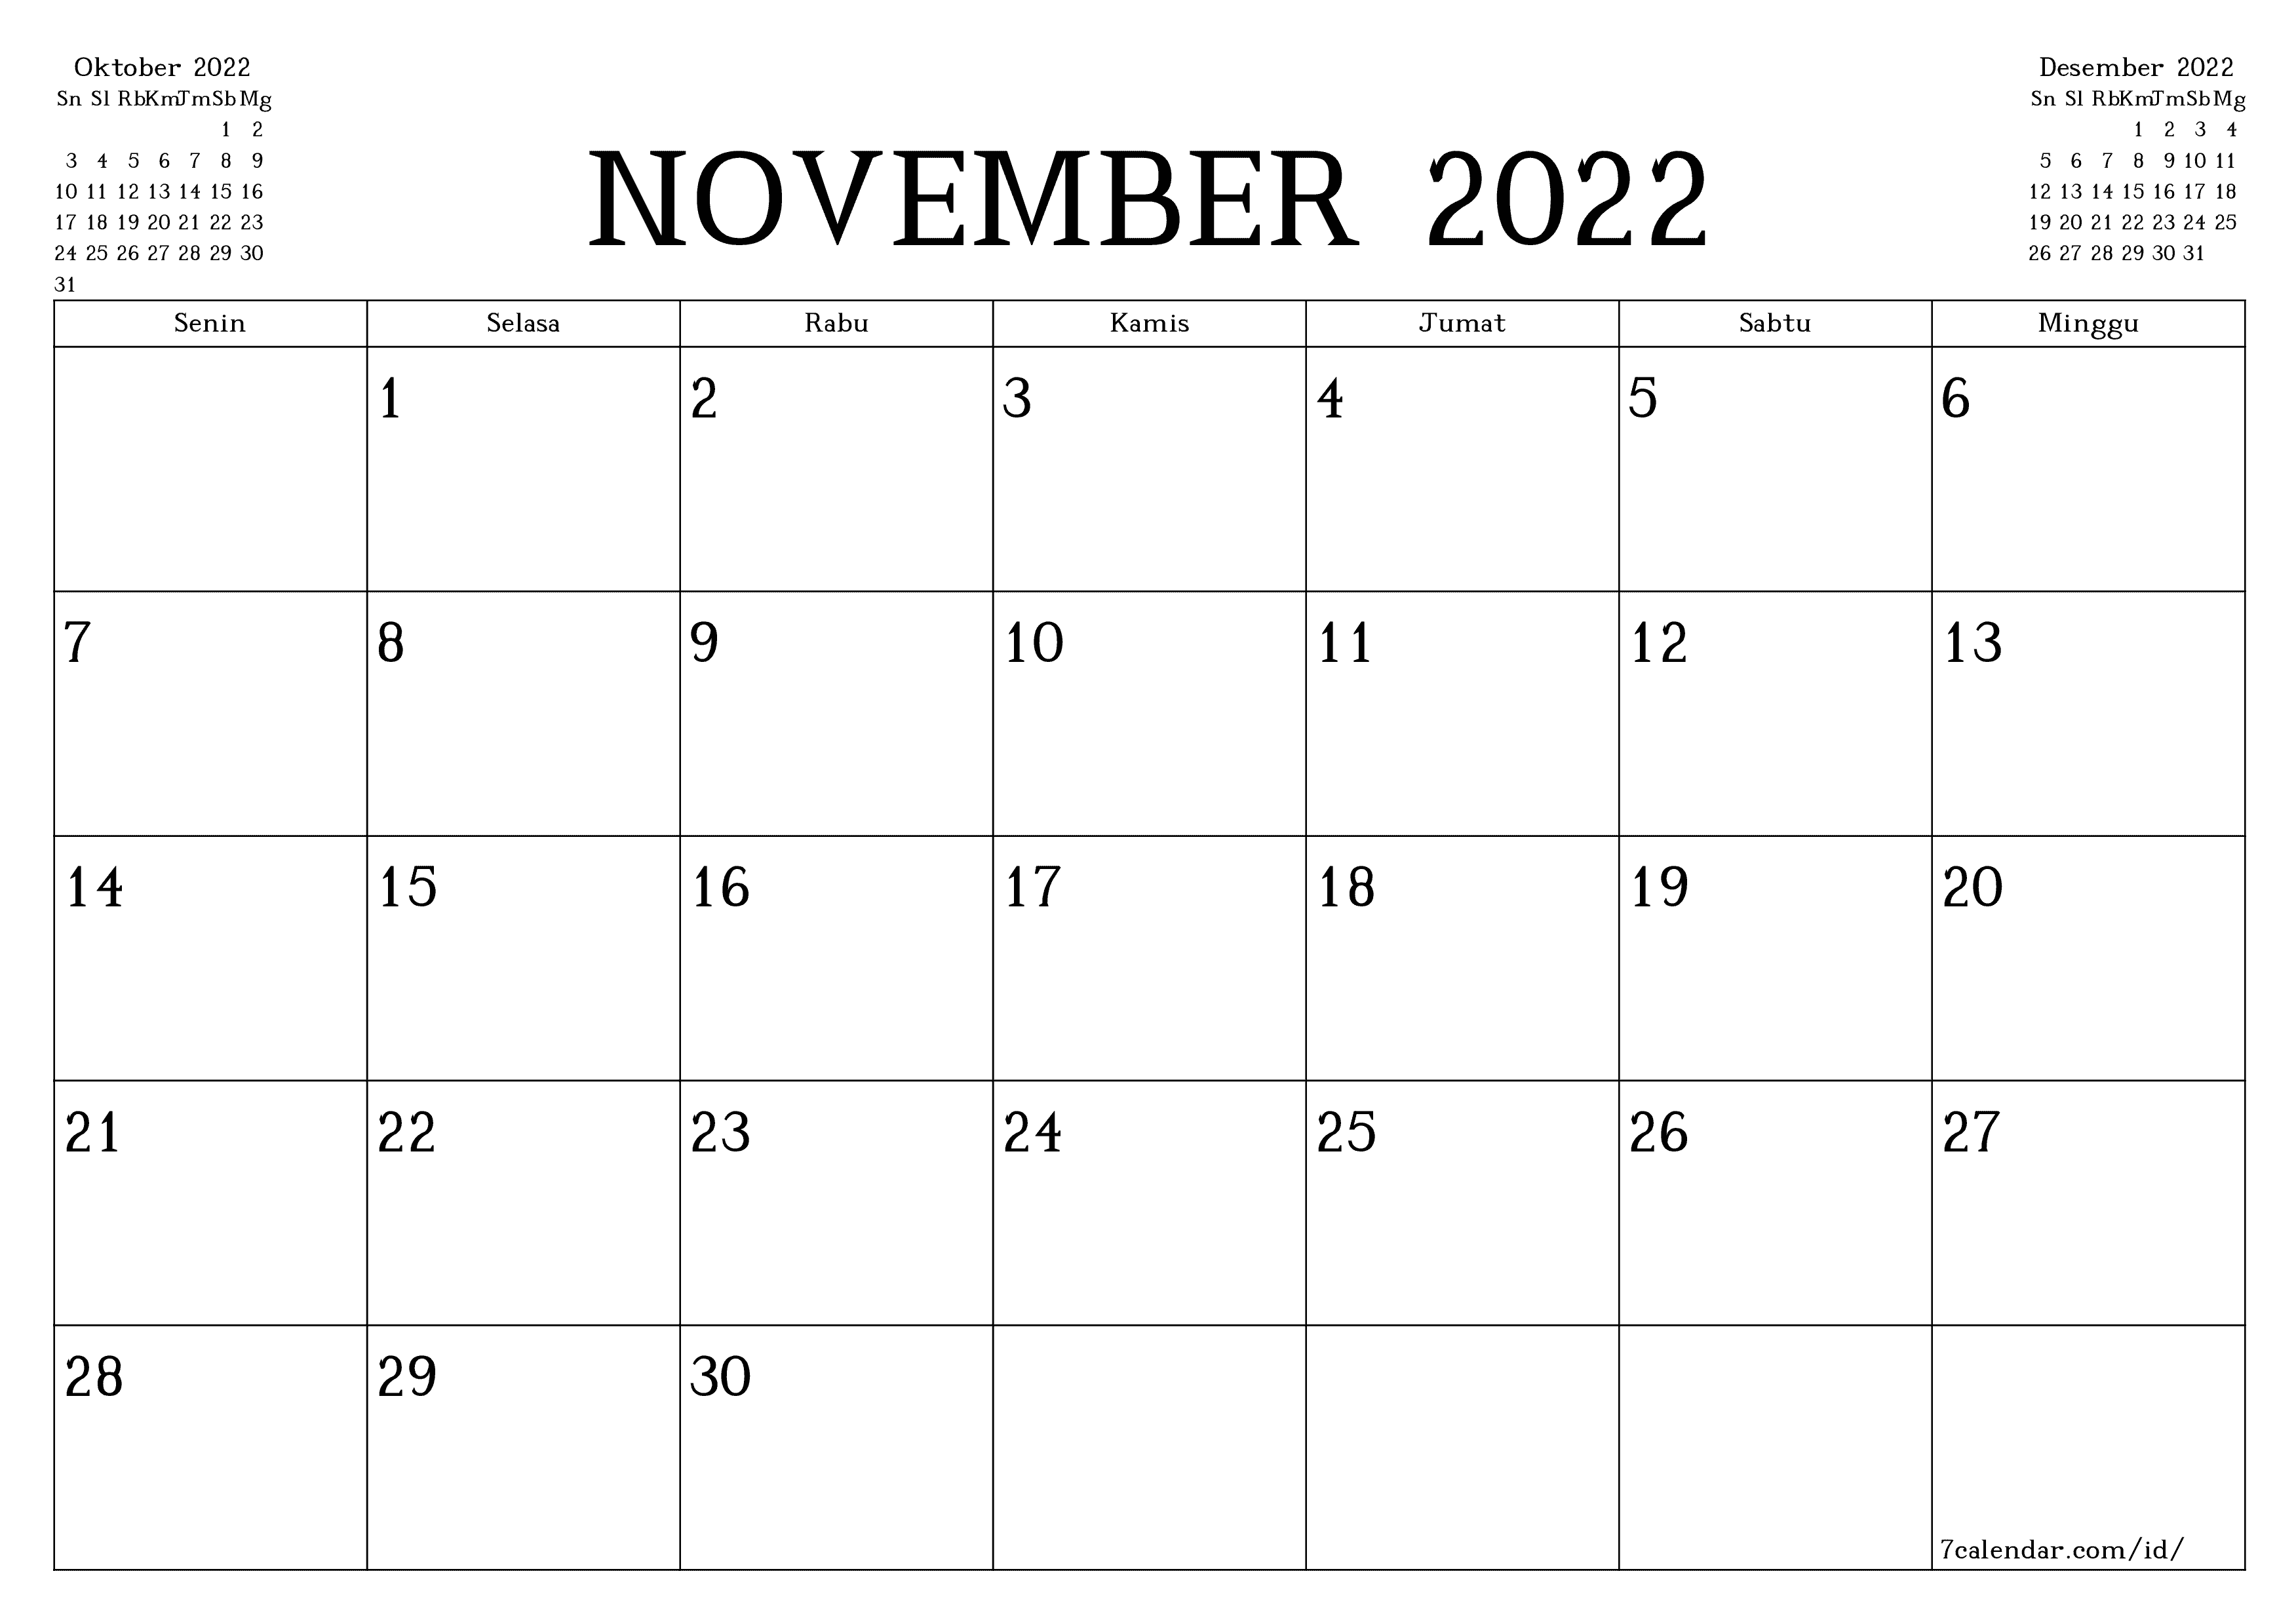 Kosongkan agenda bulanan untuk bulan November 2022 dengan catatan, simpan dan cetak ke PDF PNG Indonesian - 7calendar.com